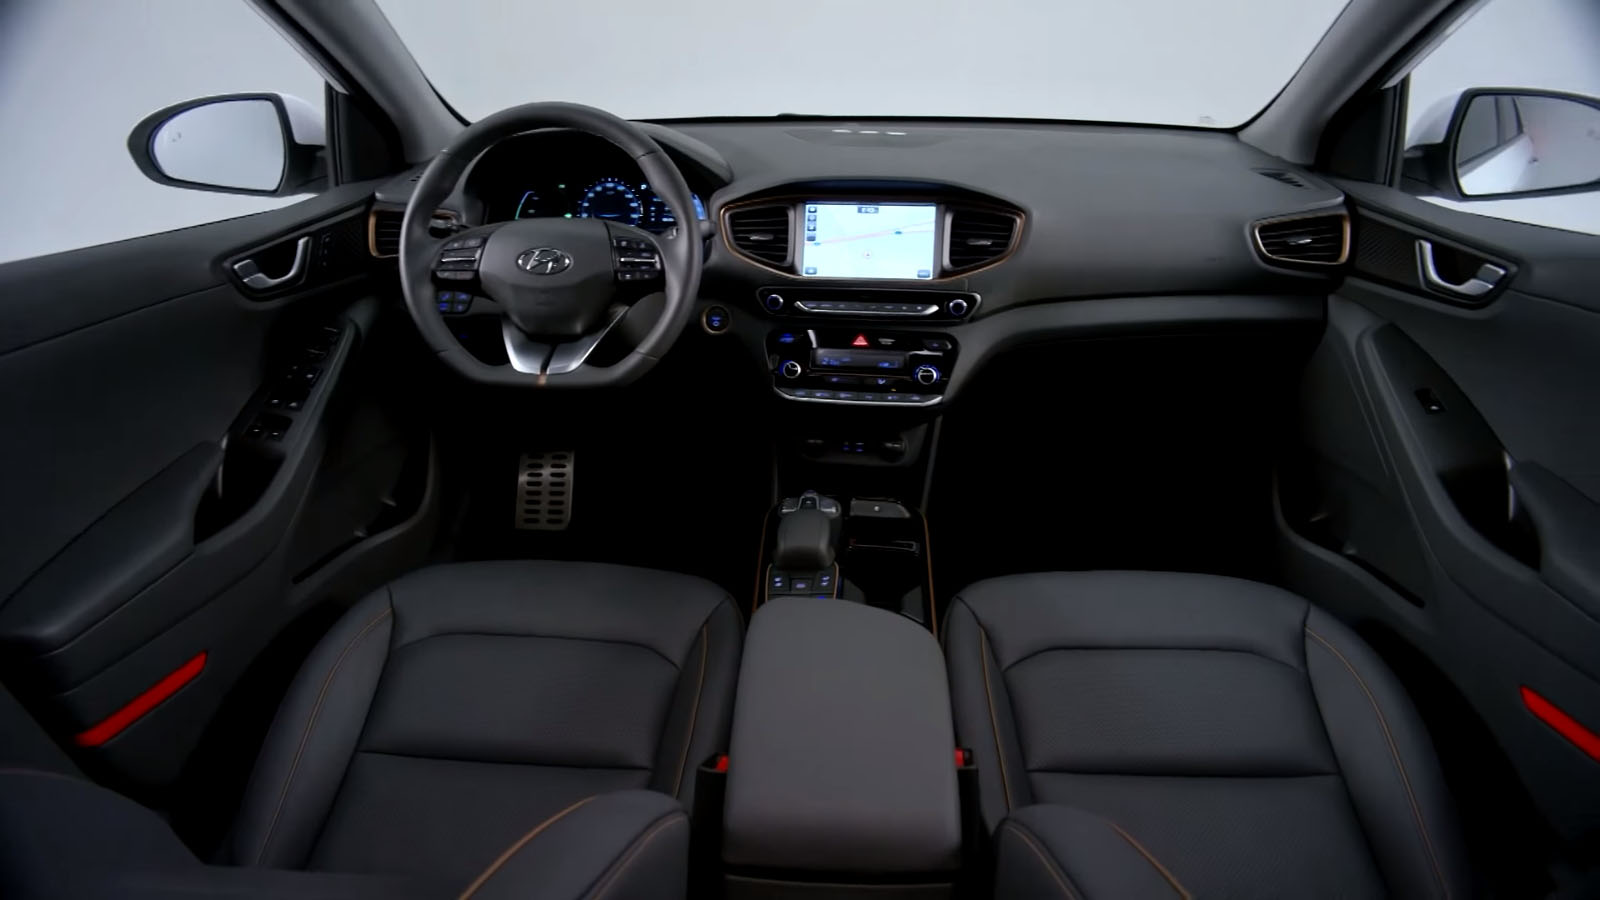 Hyundai Ioniq Electric Plug In Hybrid 2017 Interior Image ...